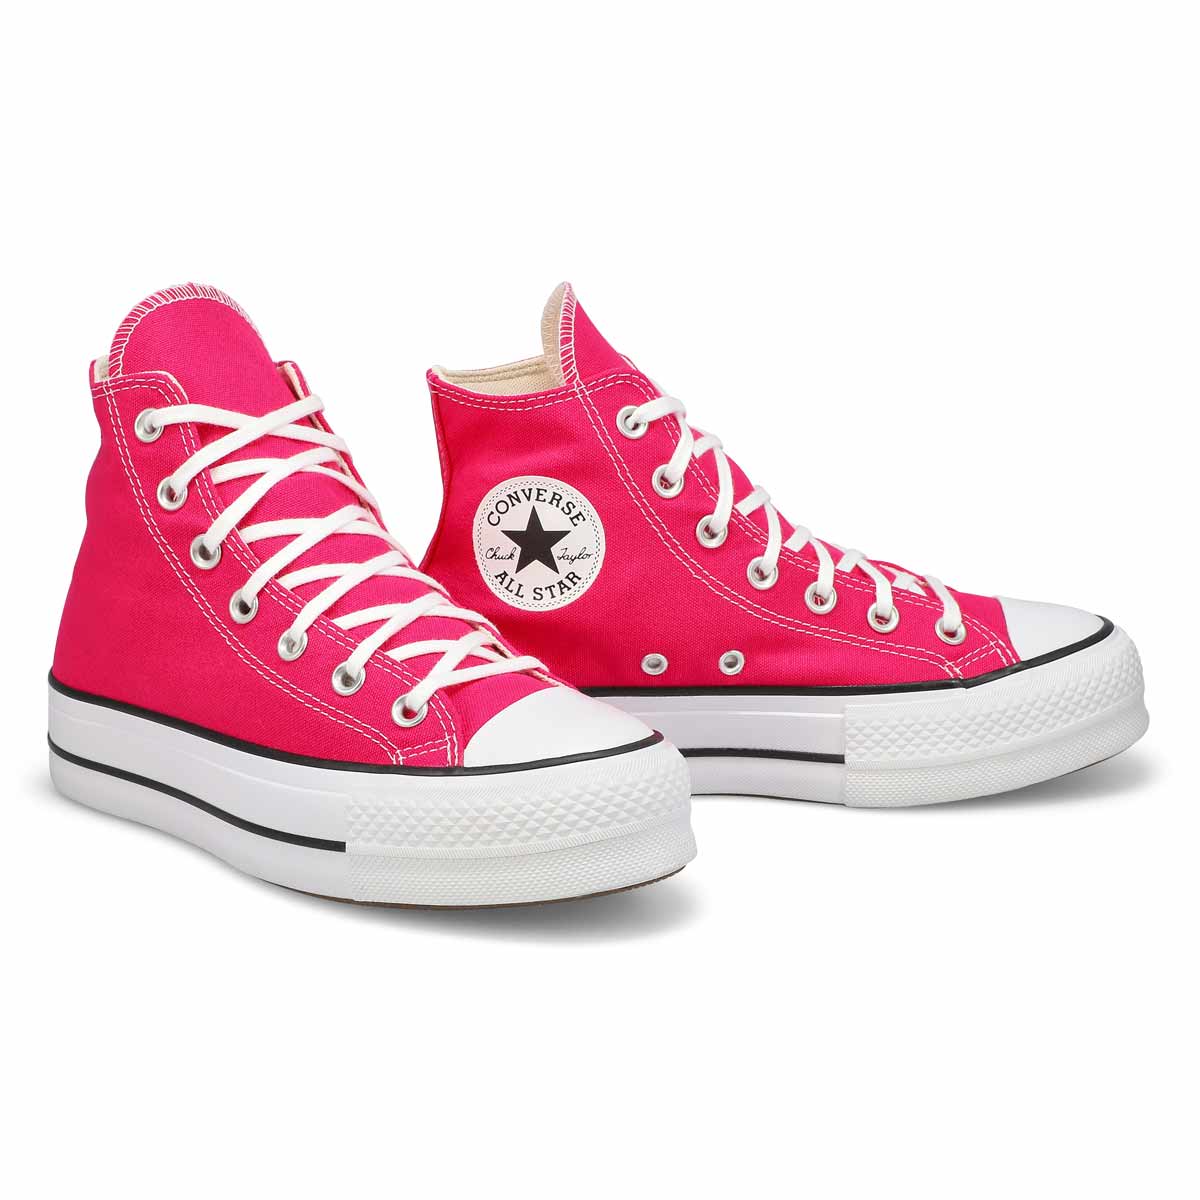 Women's Chuck Taylor All Star Lift Hi Top Platform Sneaker - Cerise Pink/White/Black